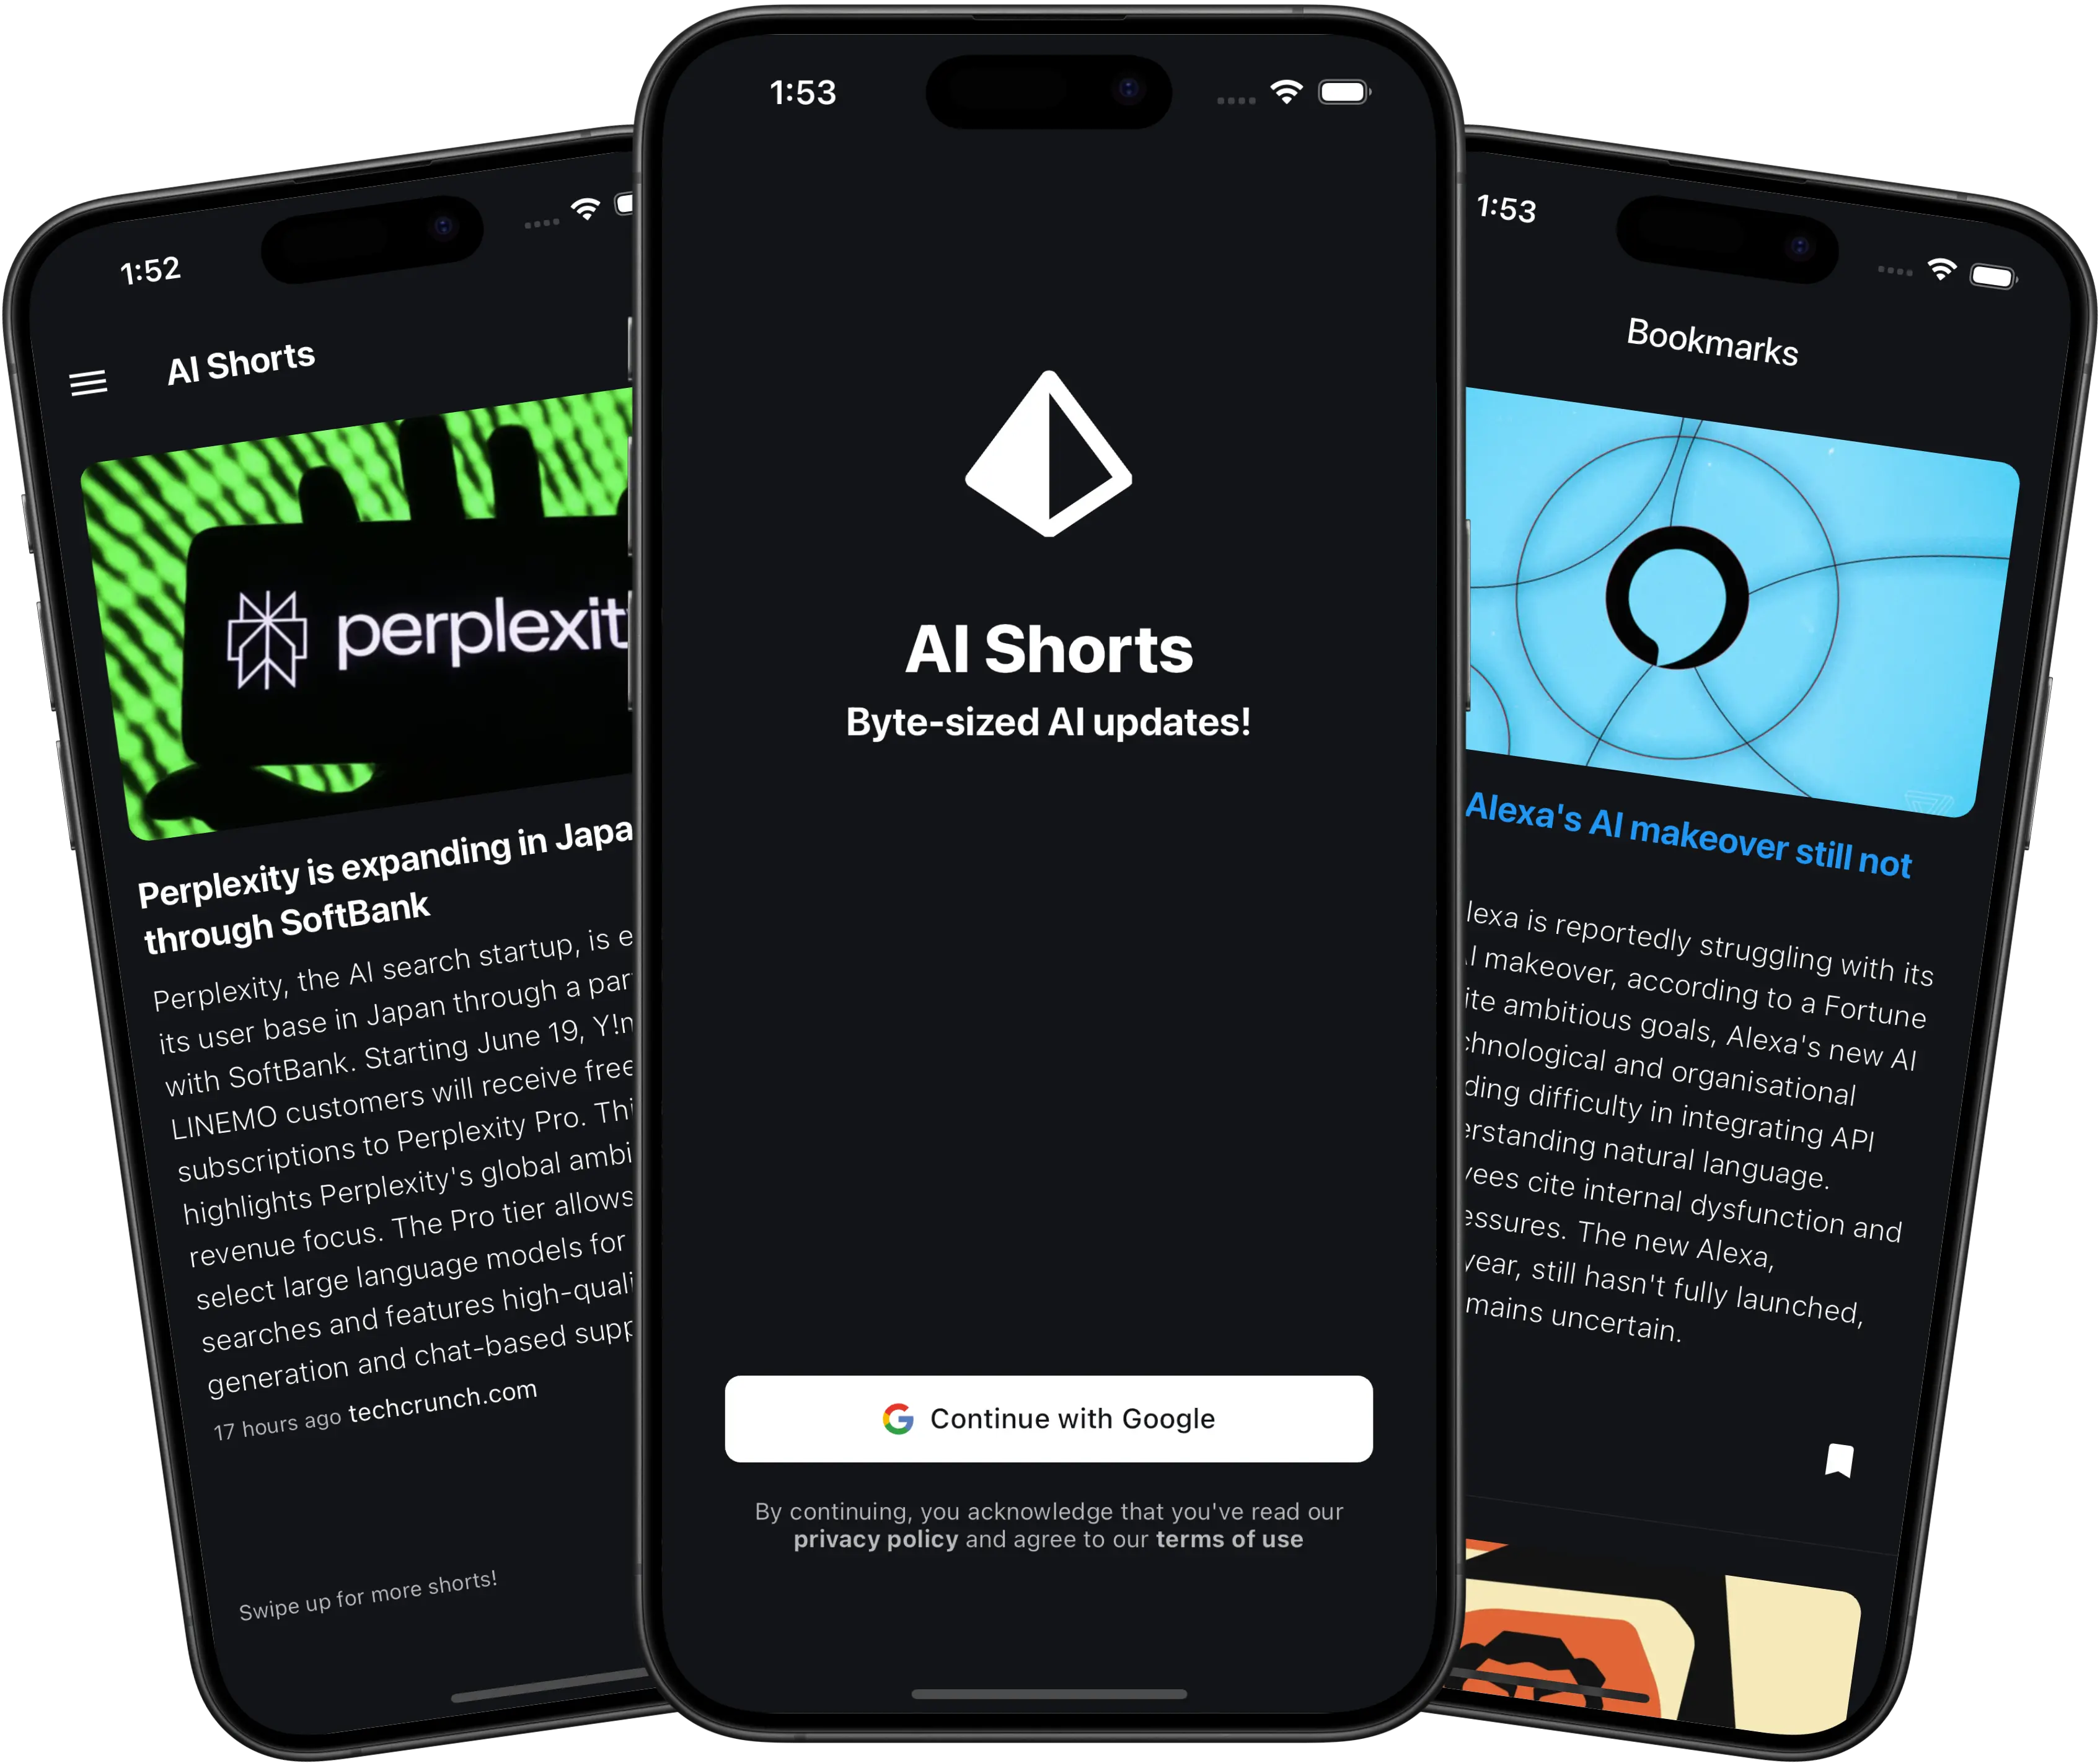 AI Shorts' app showcase